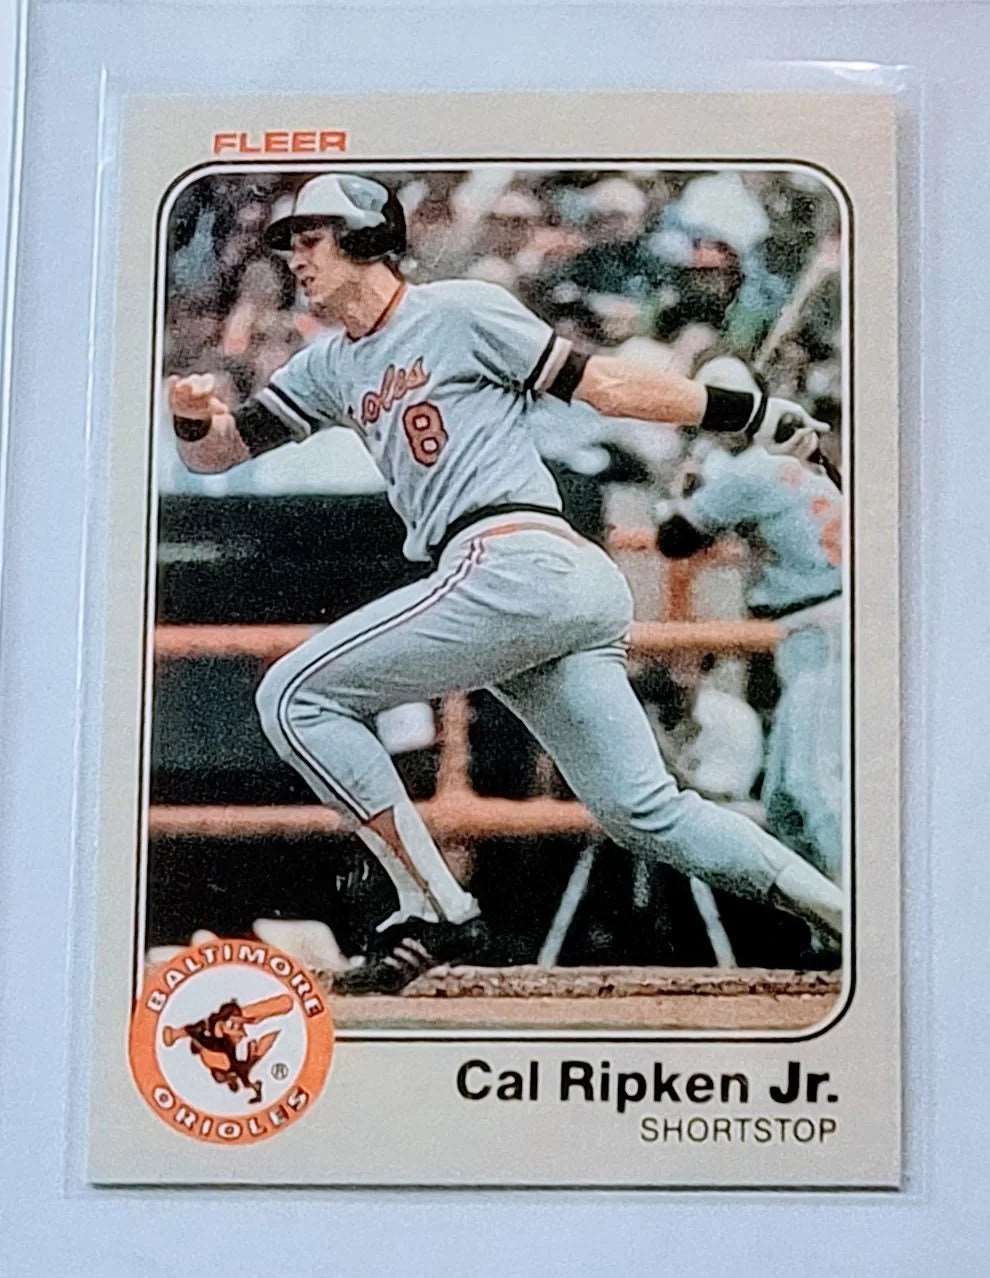 1983 Fleer Cal Ripken Jr Baseball Trading Card TPTV simple Xclusive Collectibles   